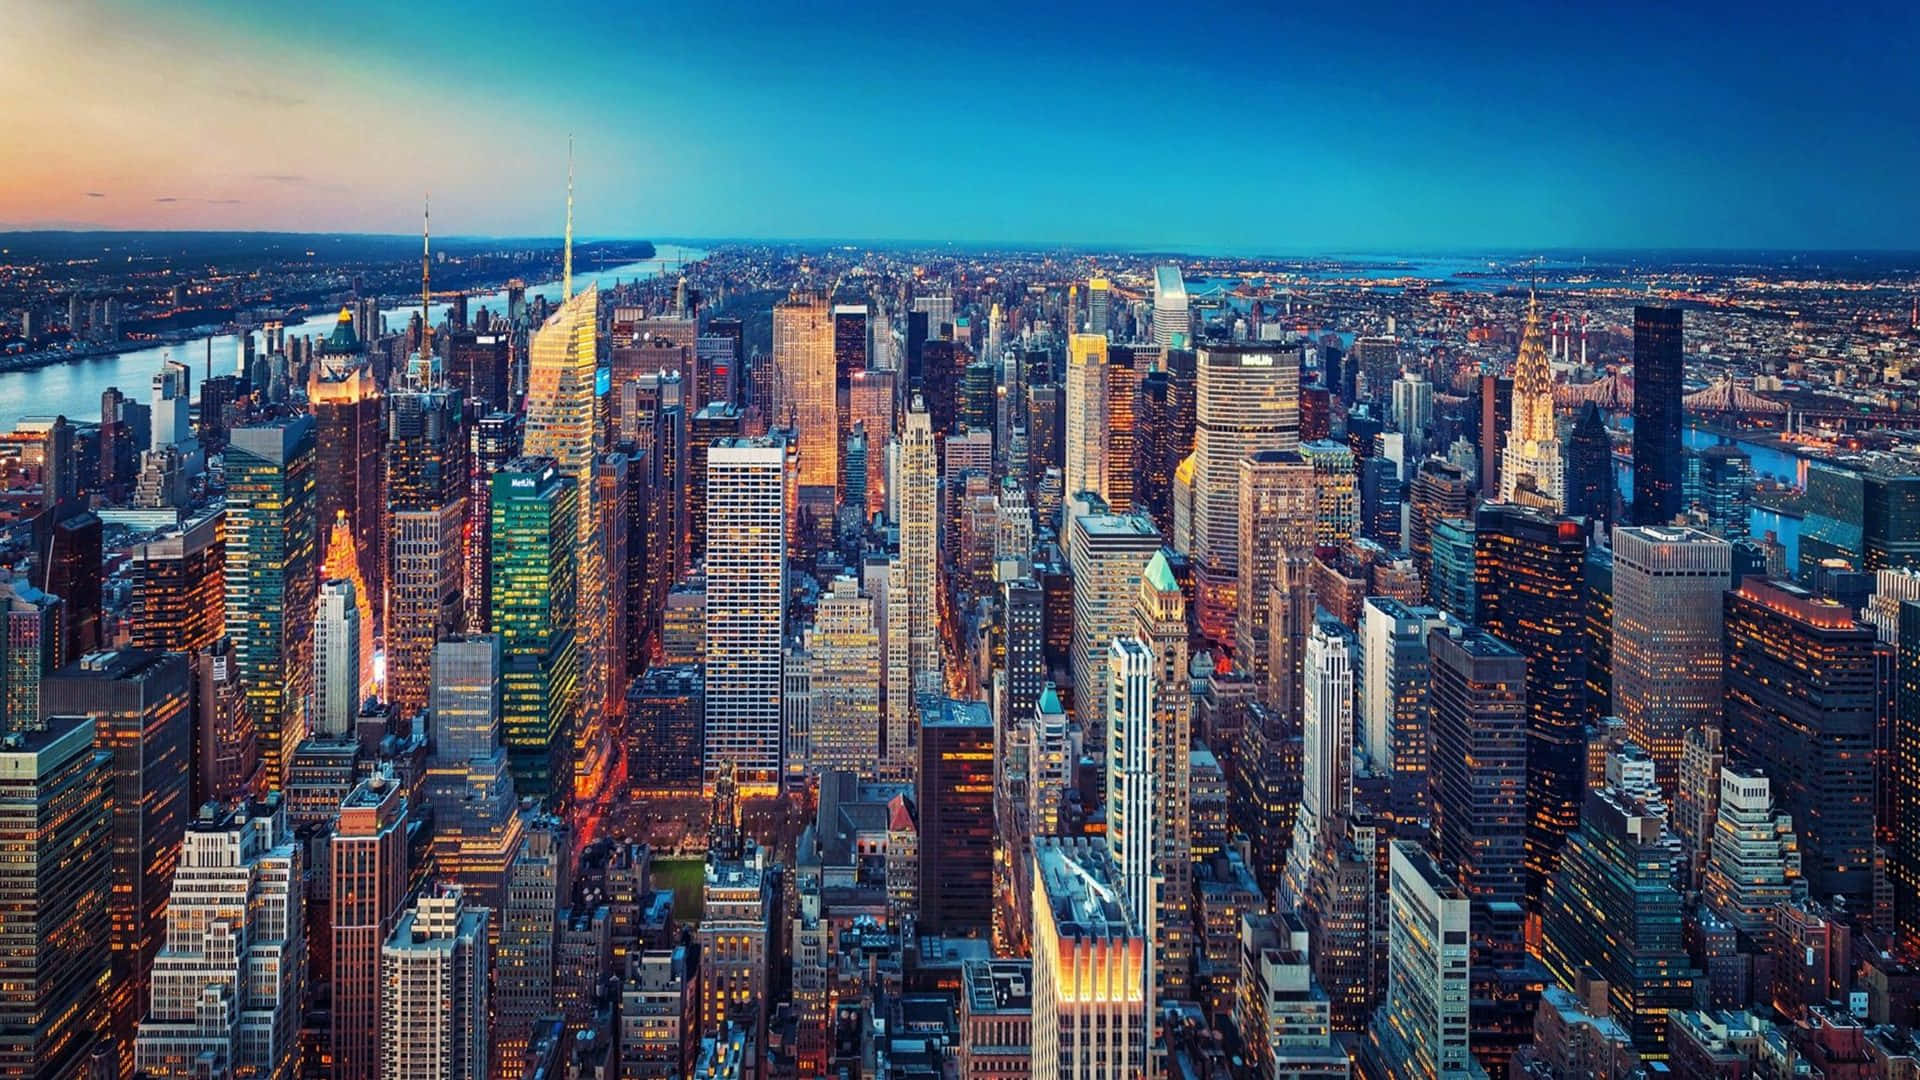 Iconic New York skyline with Freedom Tower